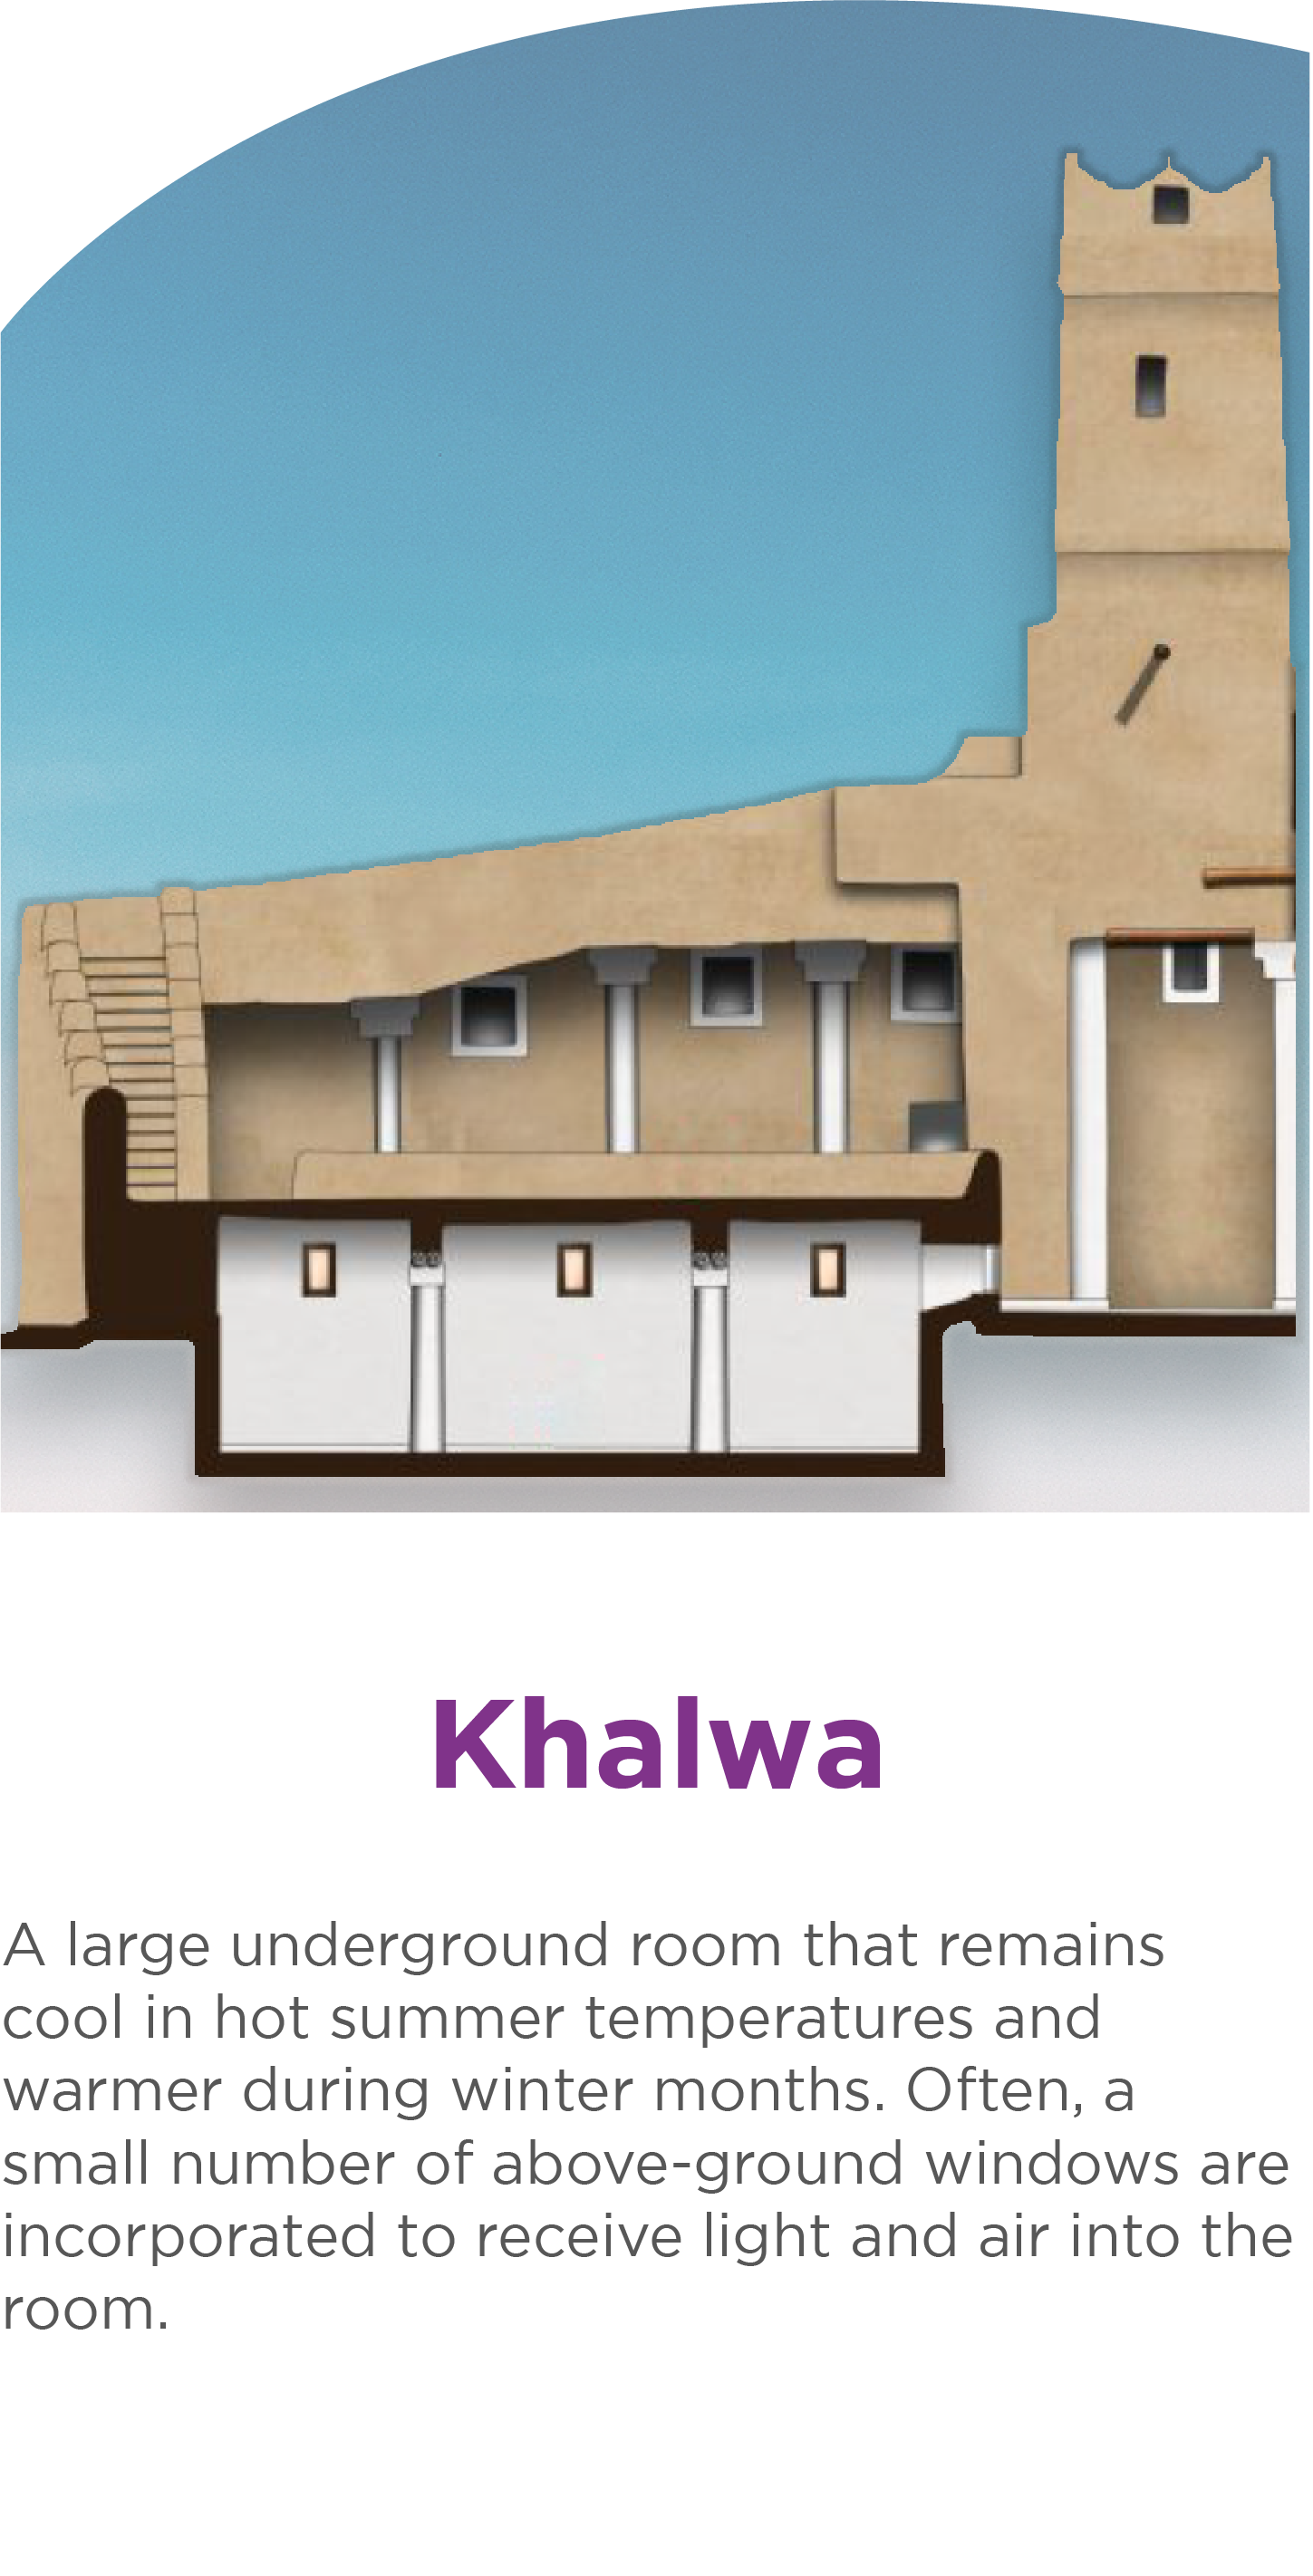 khalwa mosque